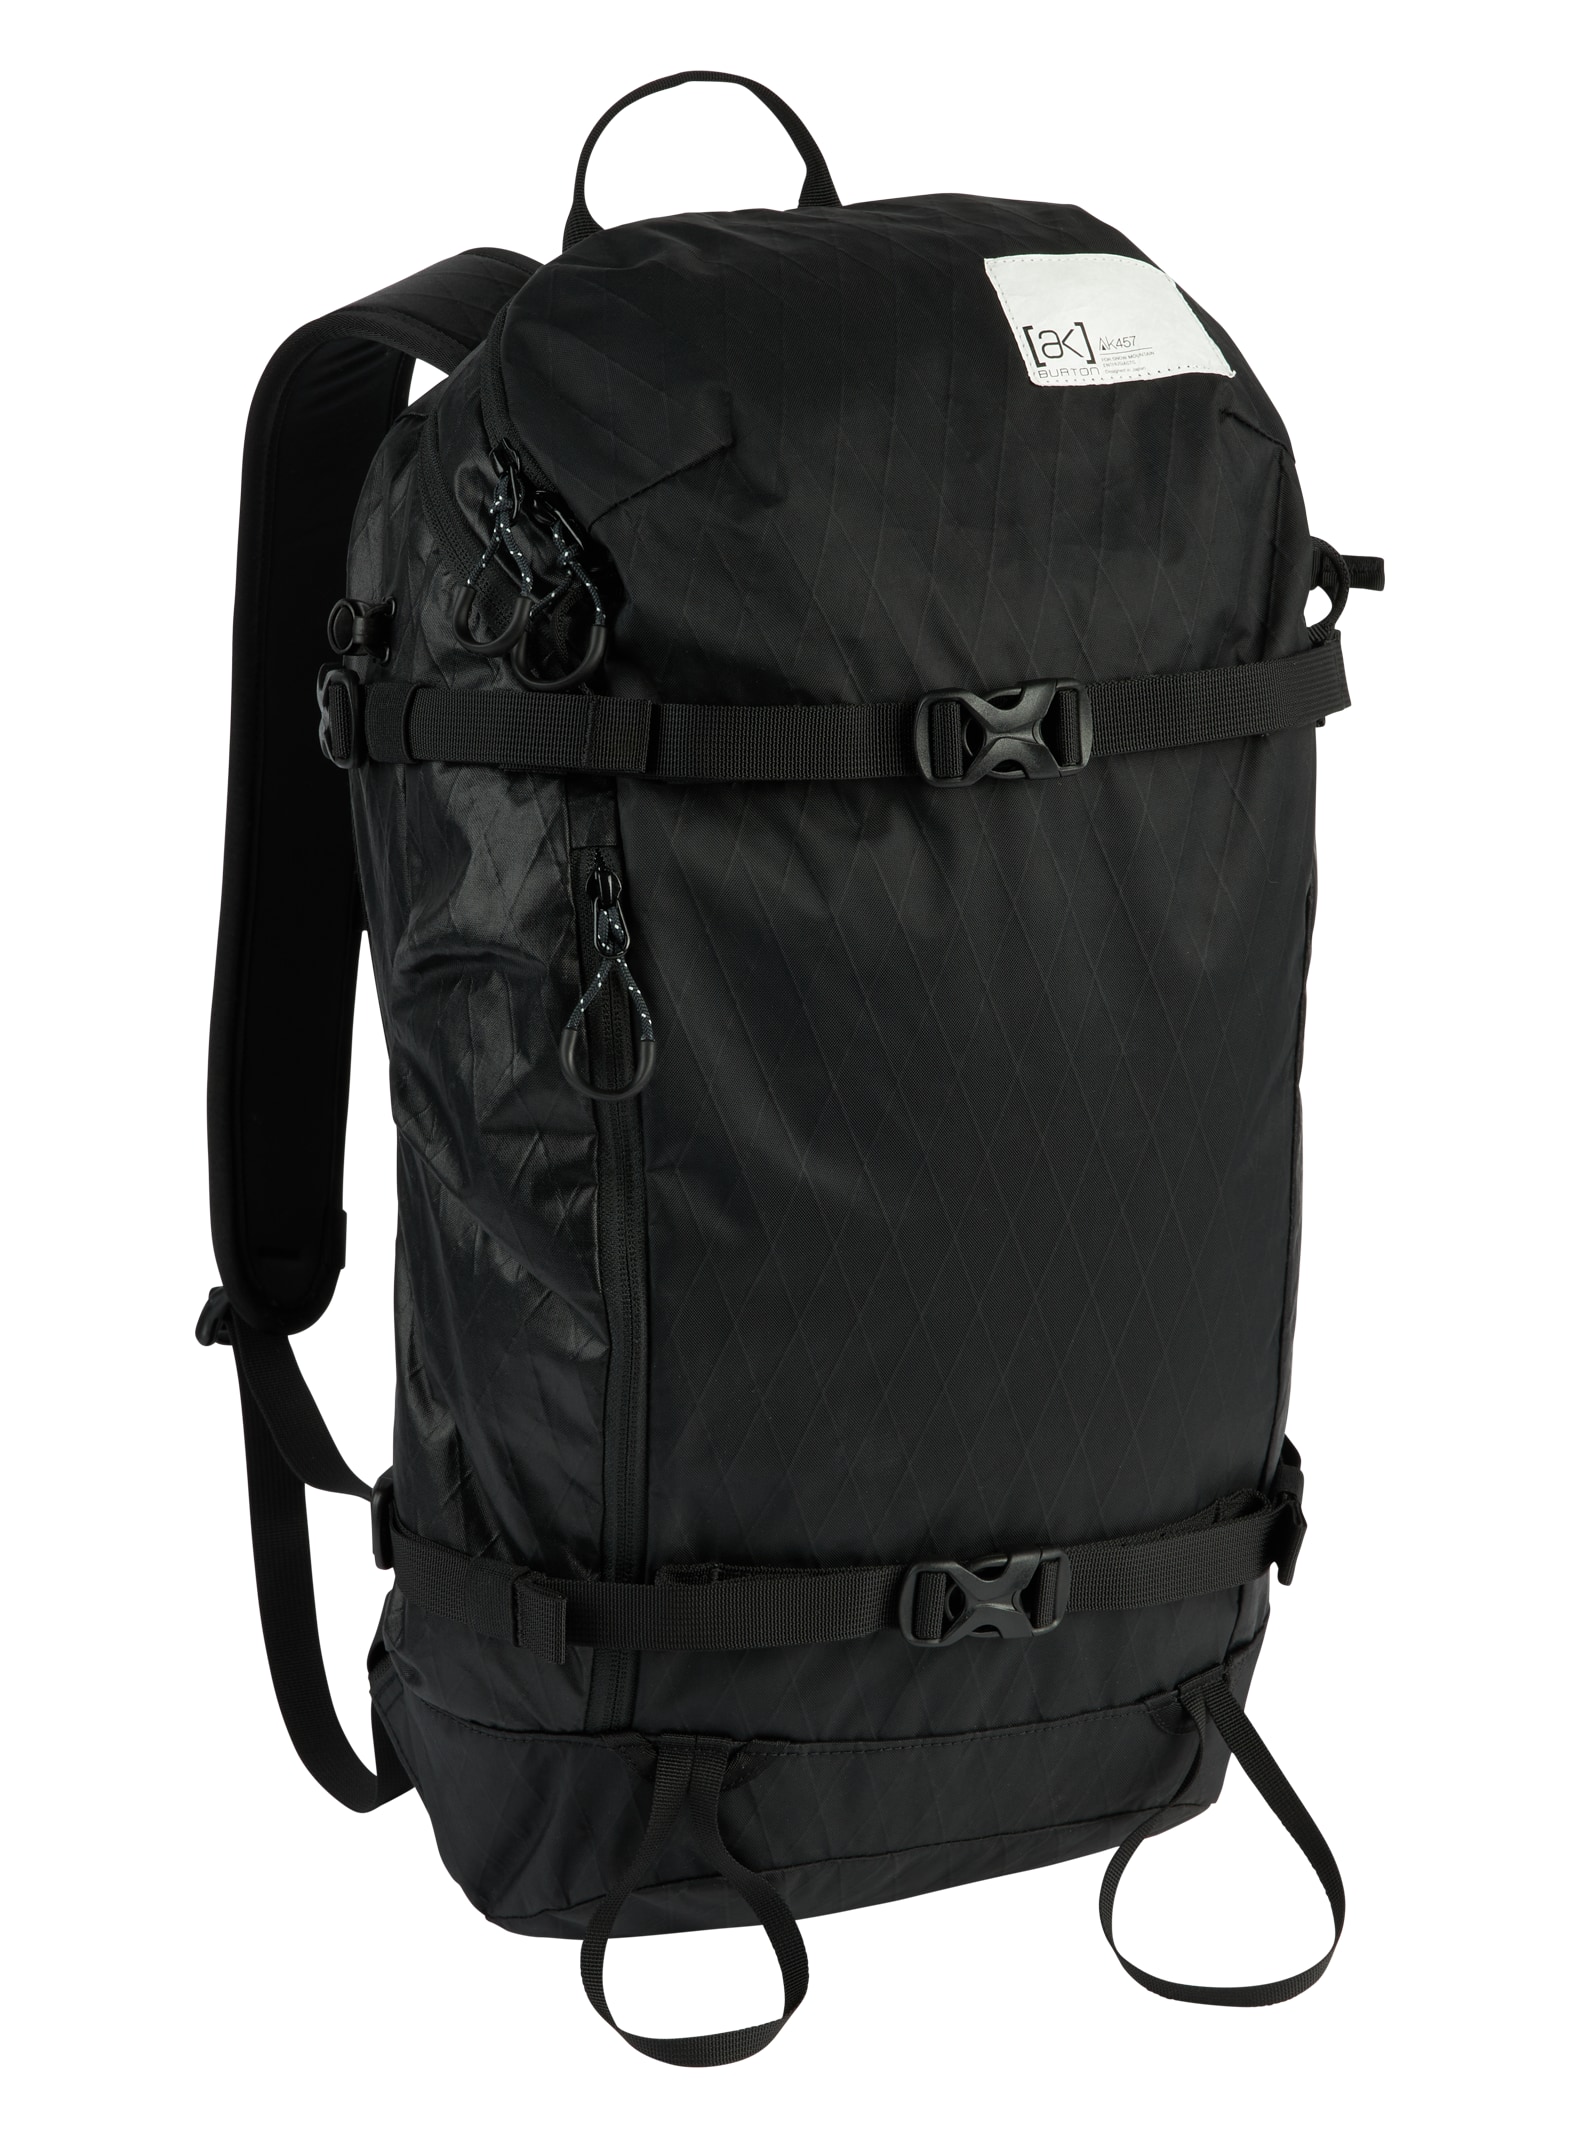 Burton [ak] Japan Jet Pack 18L Backpack | Burton.com Winter 2022 US